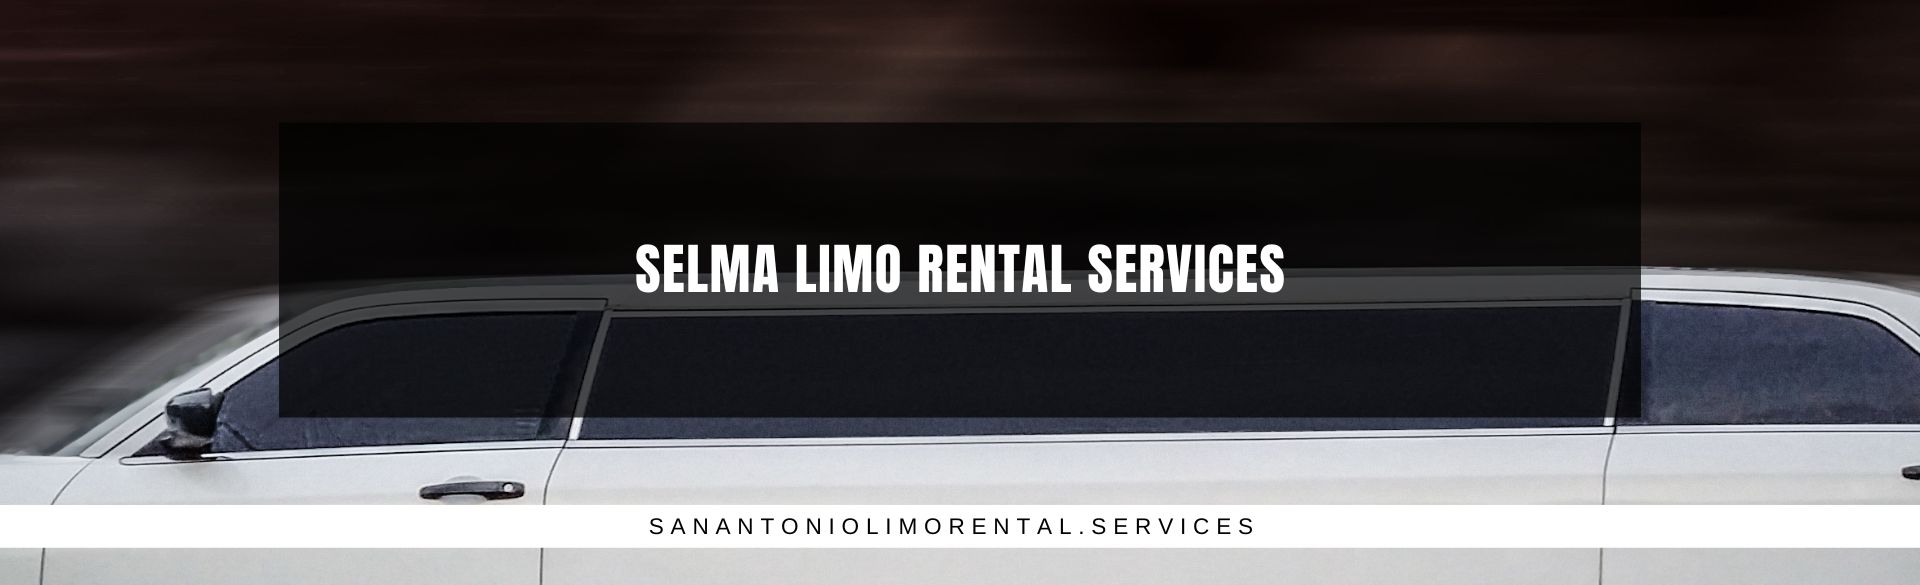 Selma Limo Rental Services